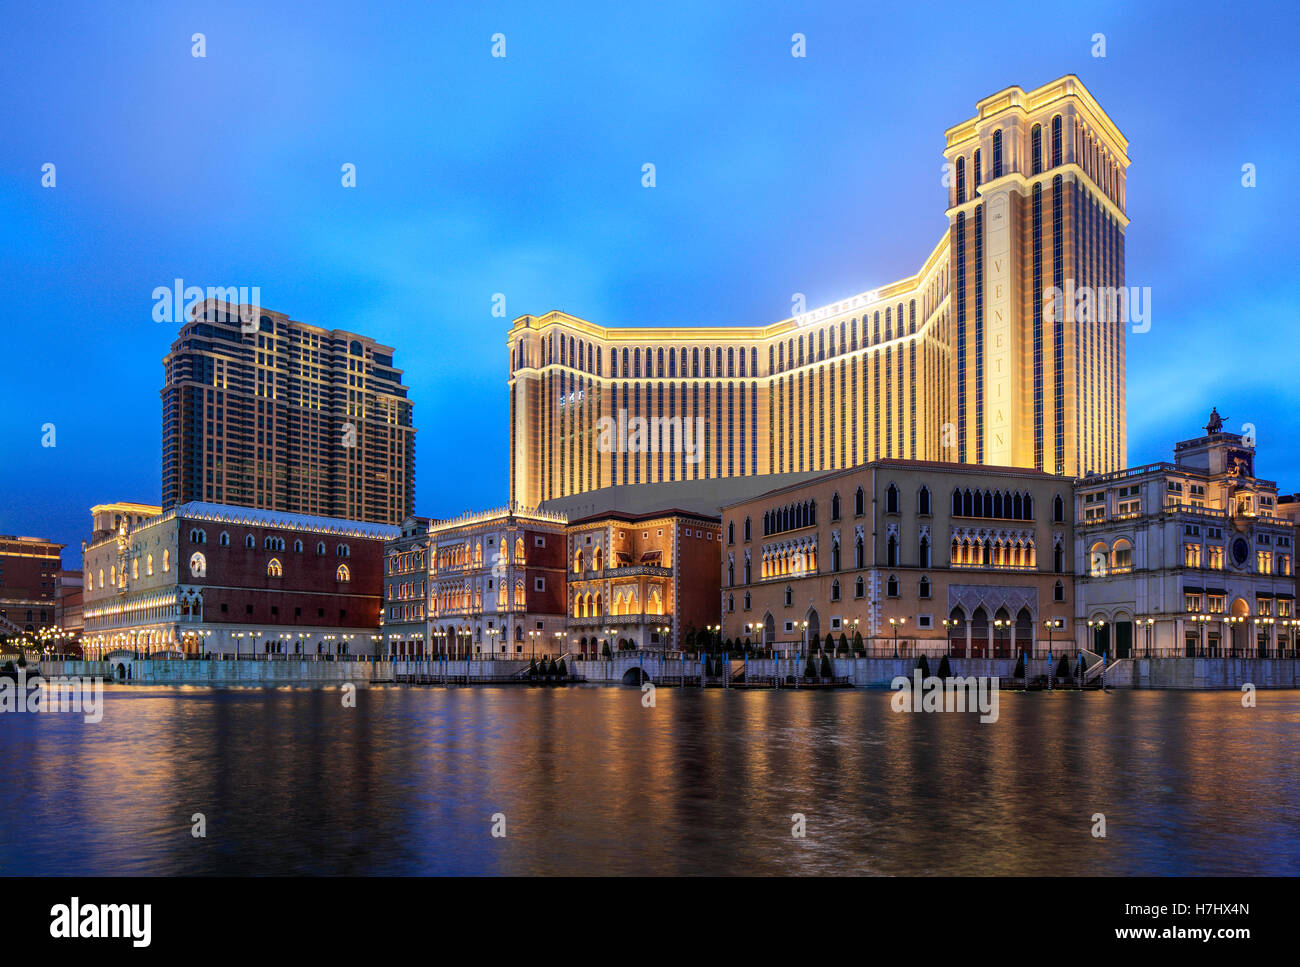 The Venetian Hotel and Casino in Cotai, Macao. Stock Photo